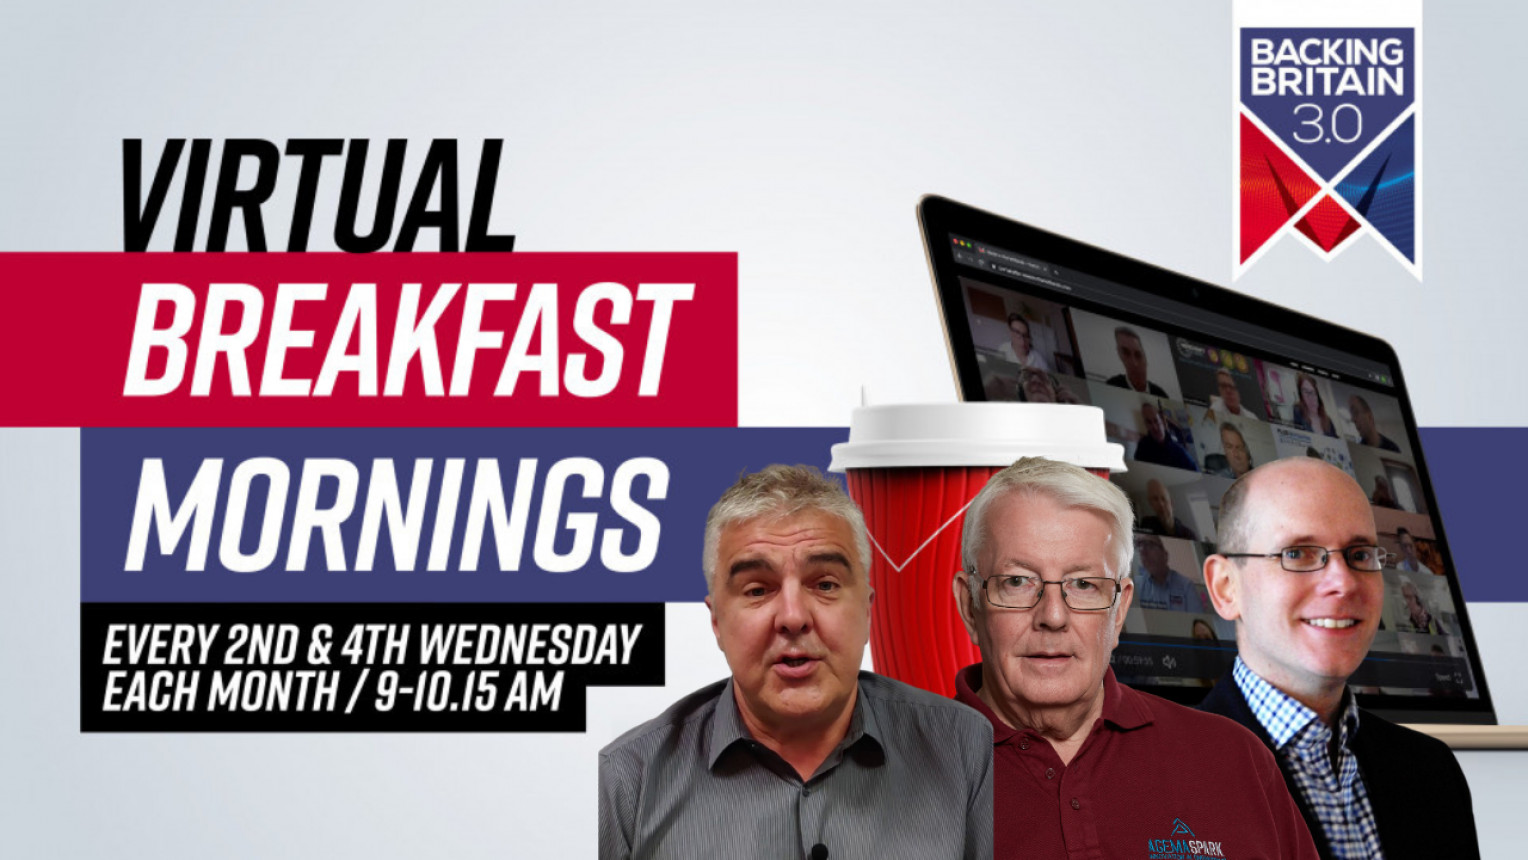 Backing Britain Virtual Breakfast Morning with Handling Concepts, Industrial Washing Machine & Agemaspark